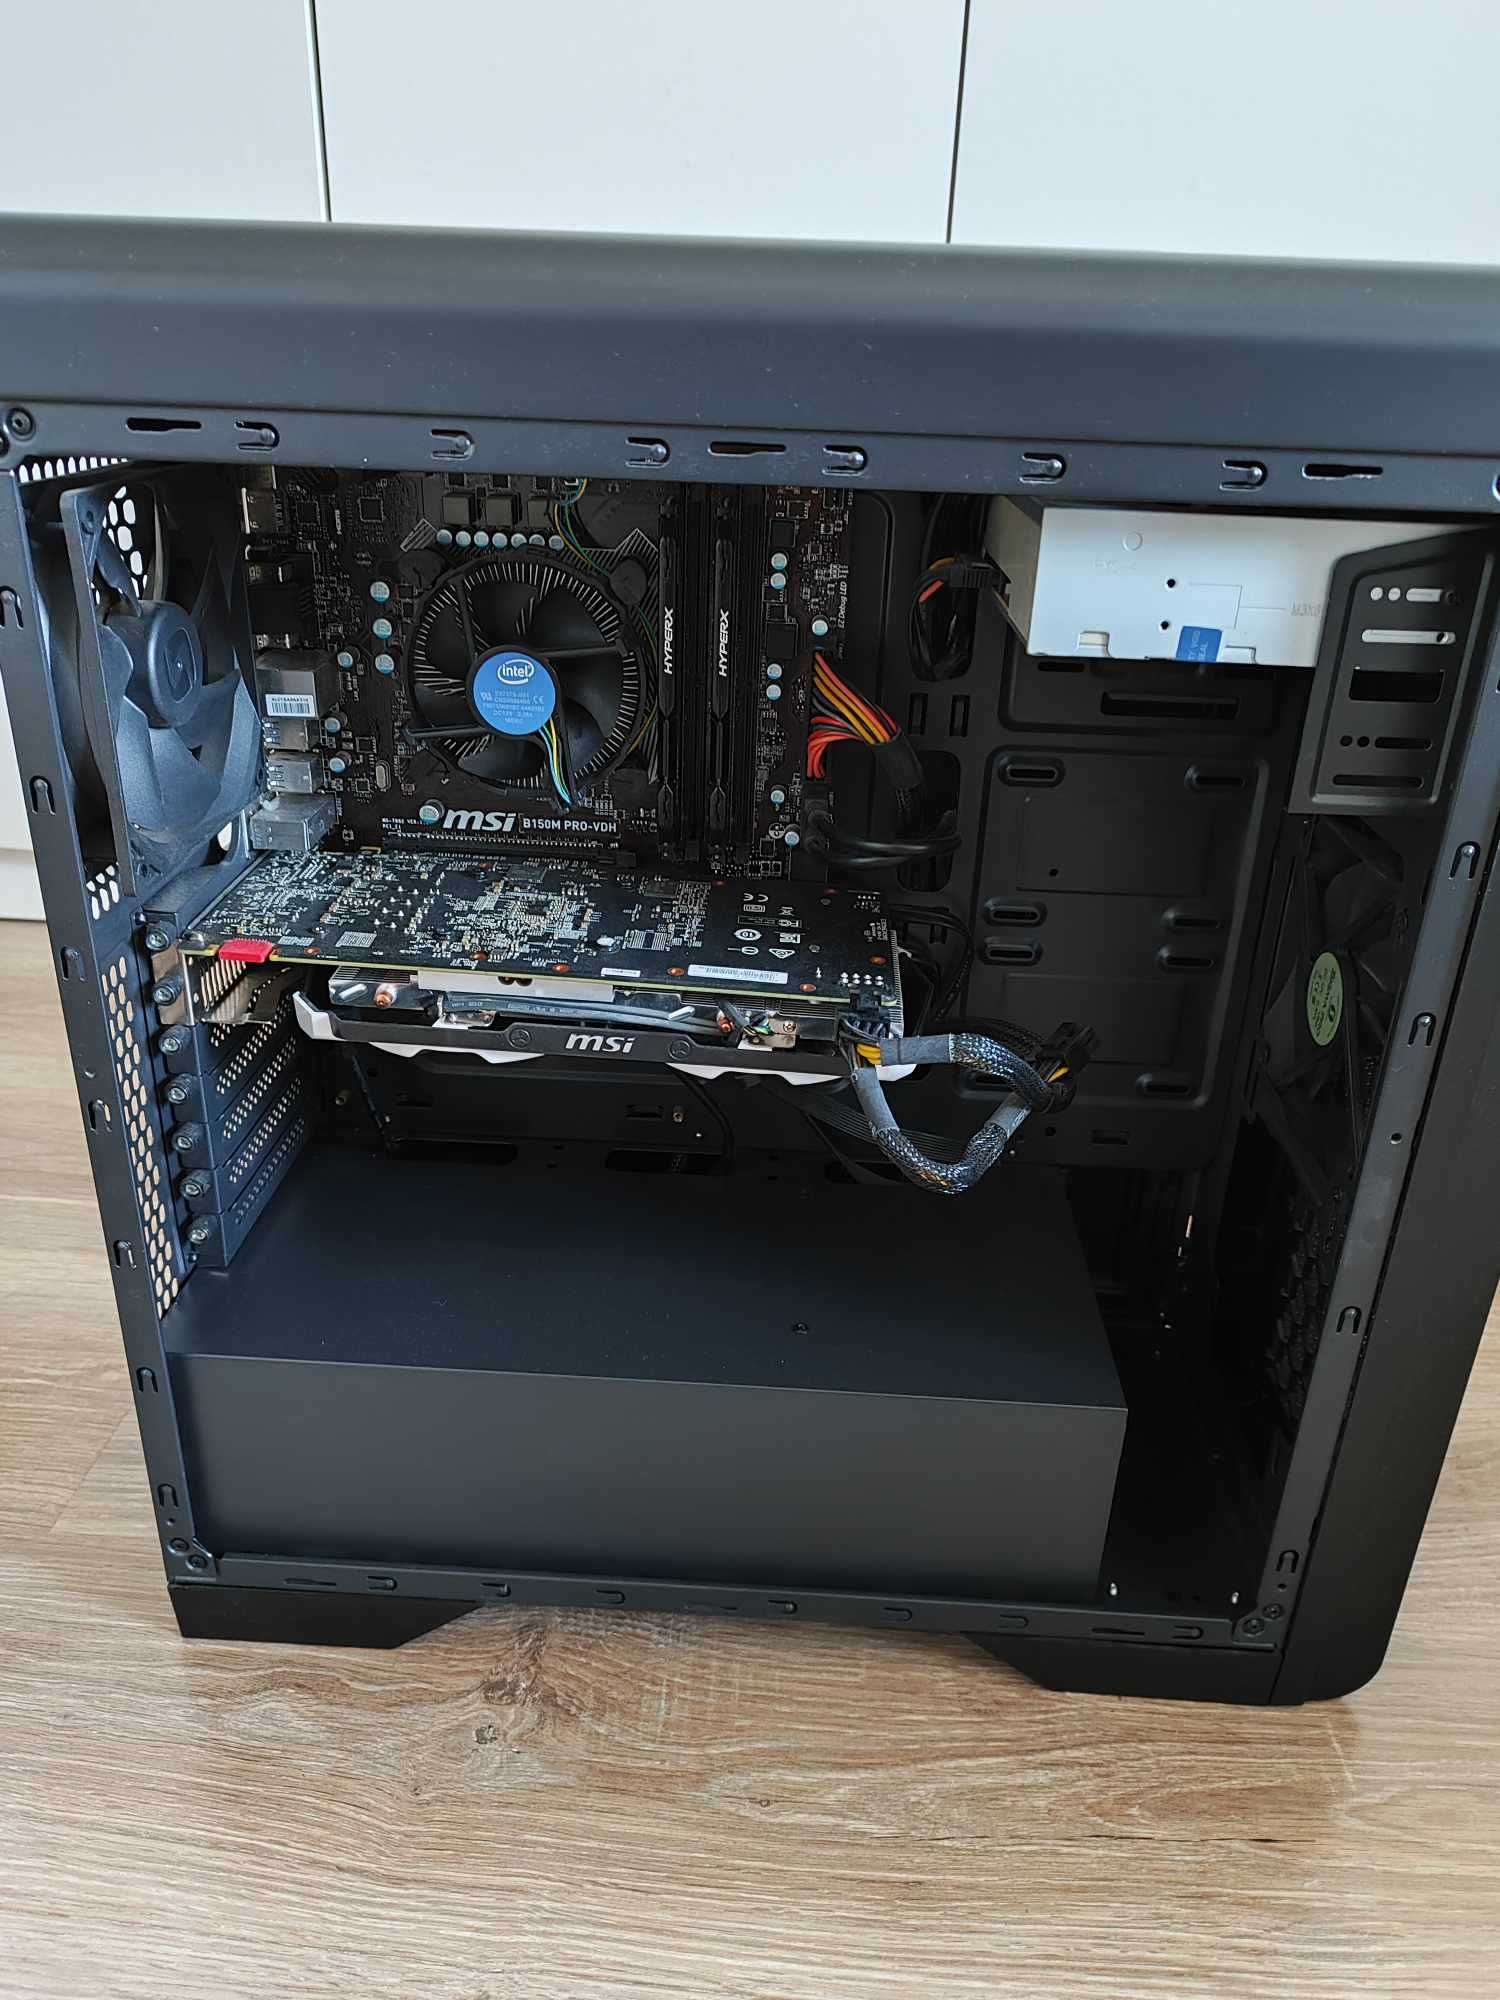 Komputer stacjonarny - NVIDIA GeForce GTX 960 + monitor Samsung (opis)